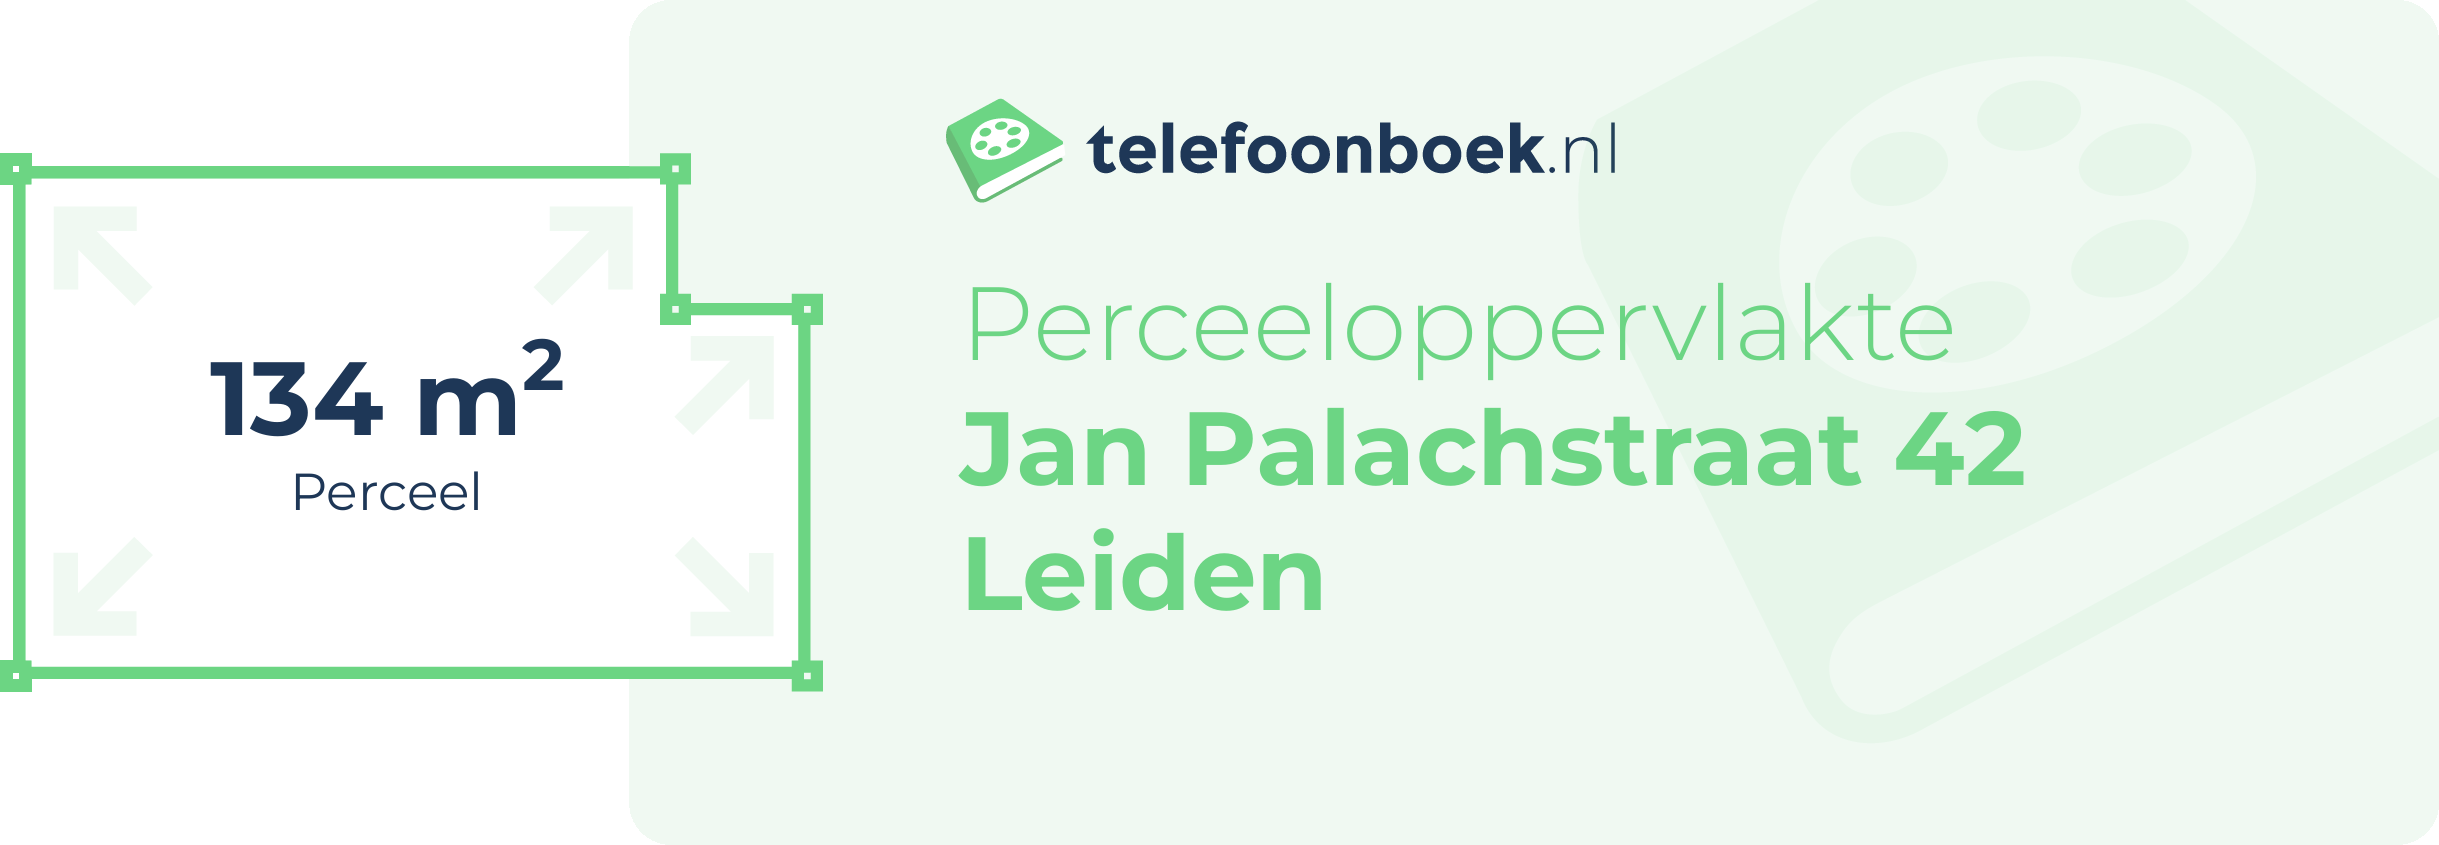 Perceeloppervlakte Jan Palachstraat 42 Leiden